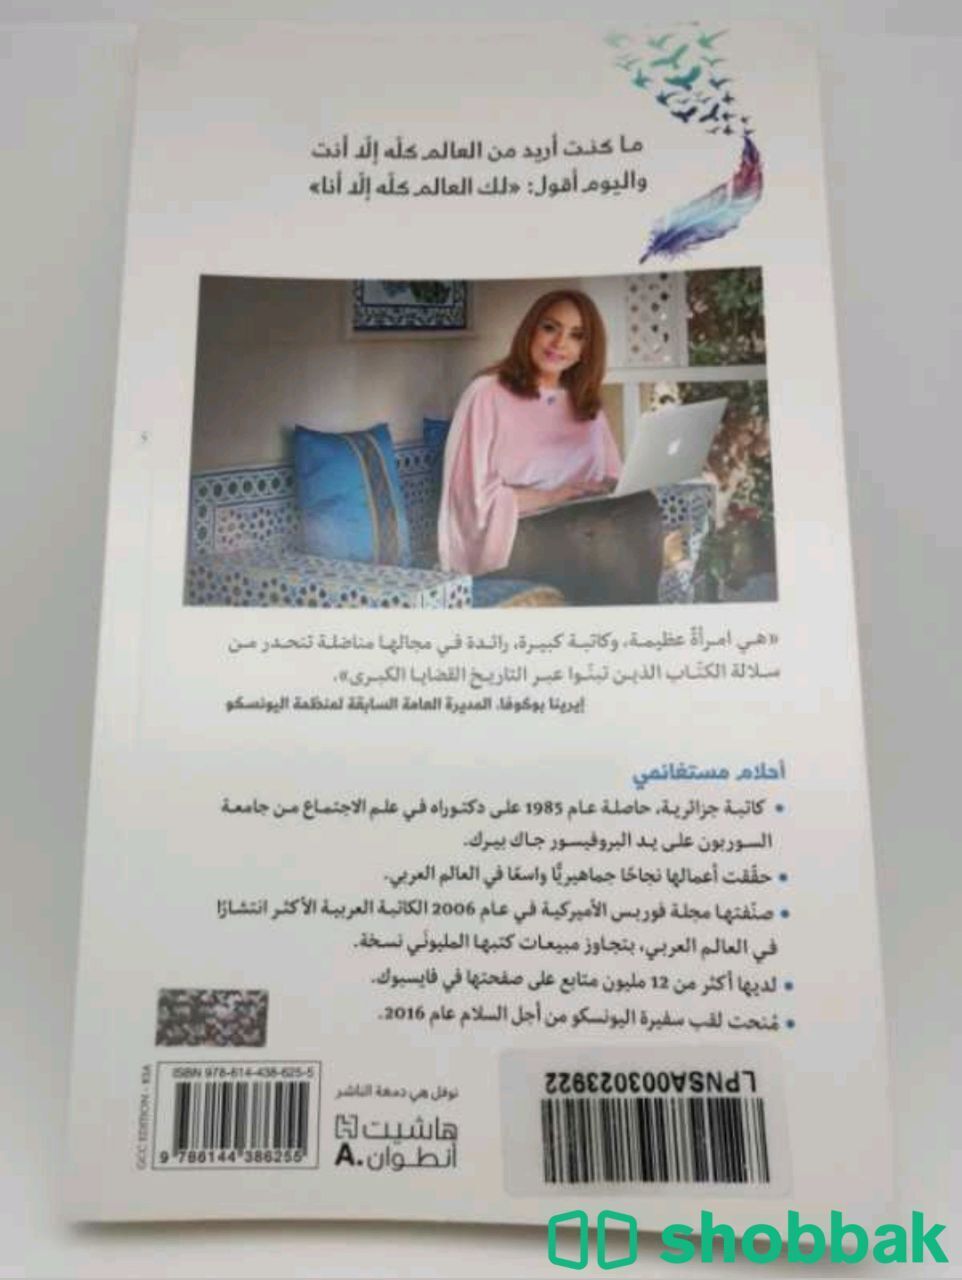 كتاب شهيًّا كفراق Shobbak Saudi Arabia